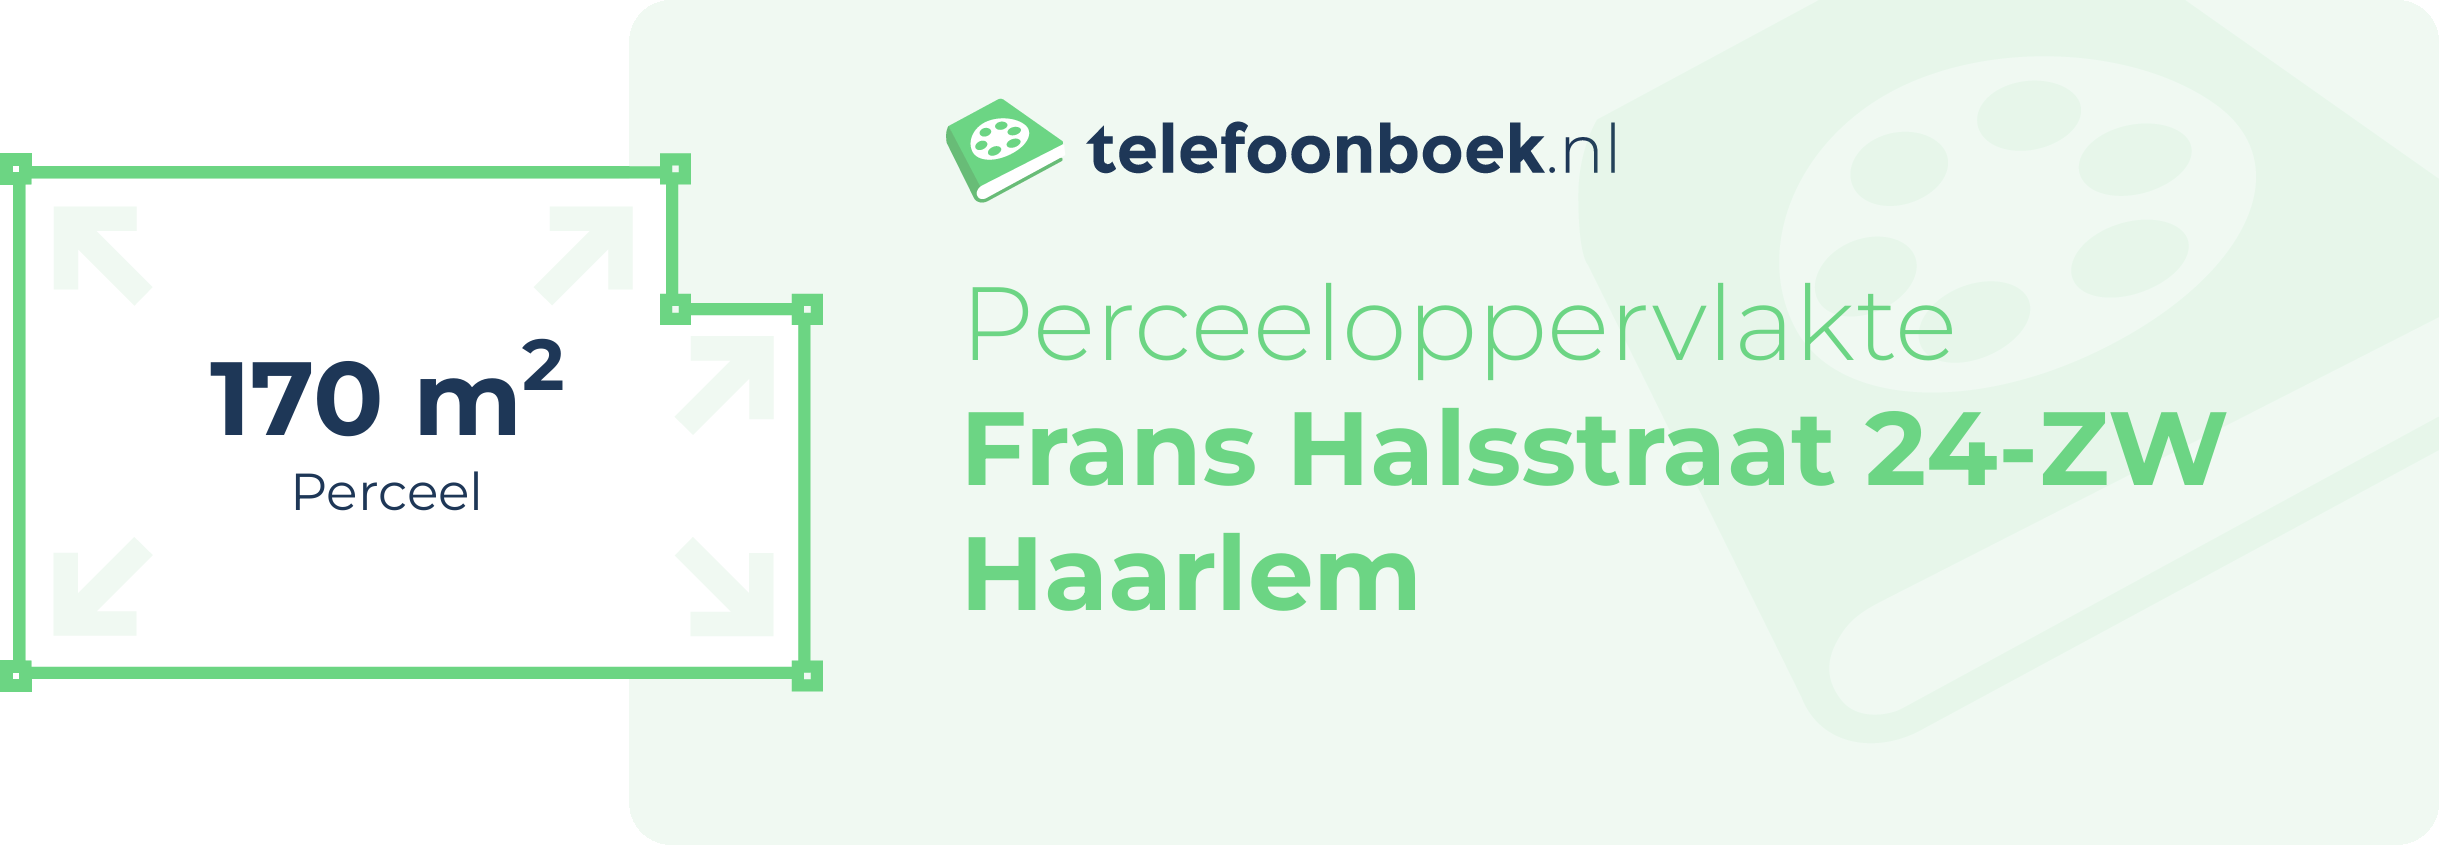 Perceeloppervlakte Frans Halsstraat 24-ZW Haarlem